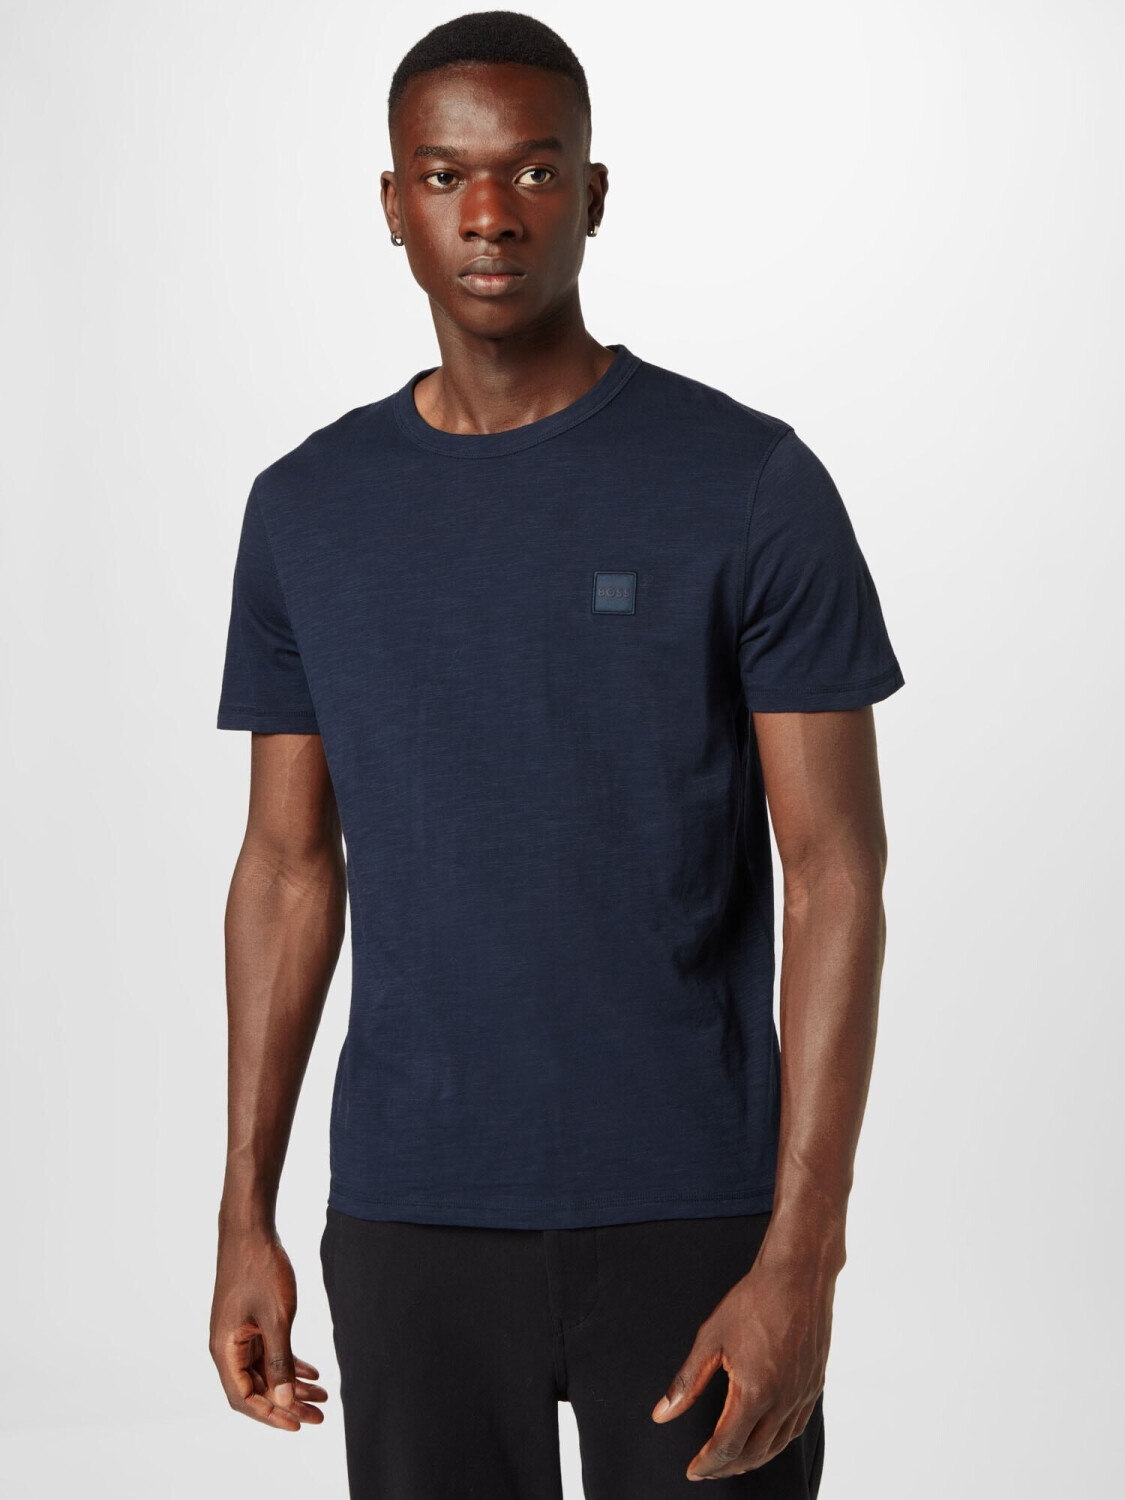 Hugo Boss Short Sleeve T-Shirt (50478771-404) blau ab 29,99 € |  Preisvergleich bei